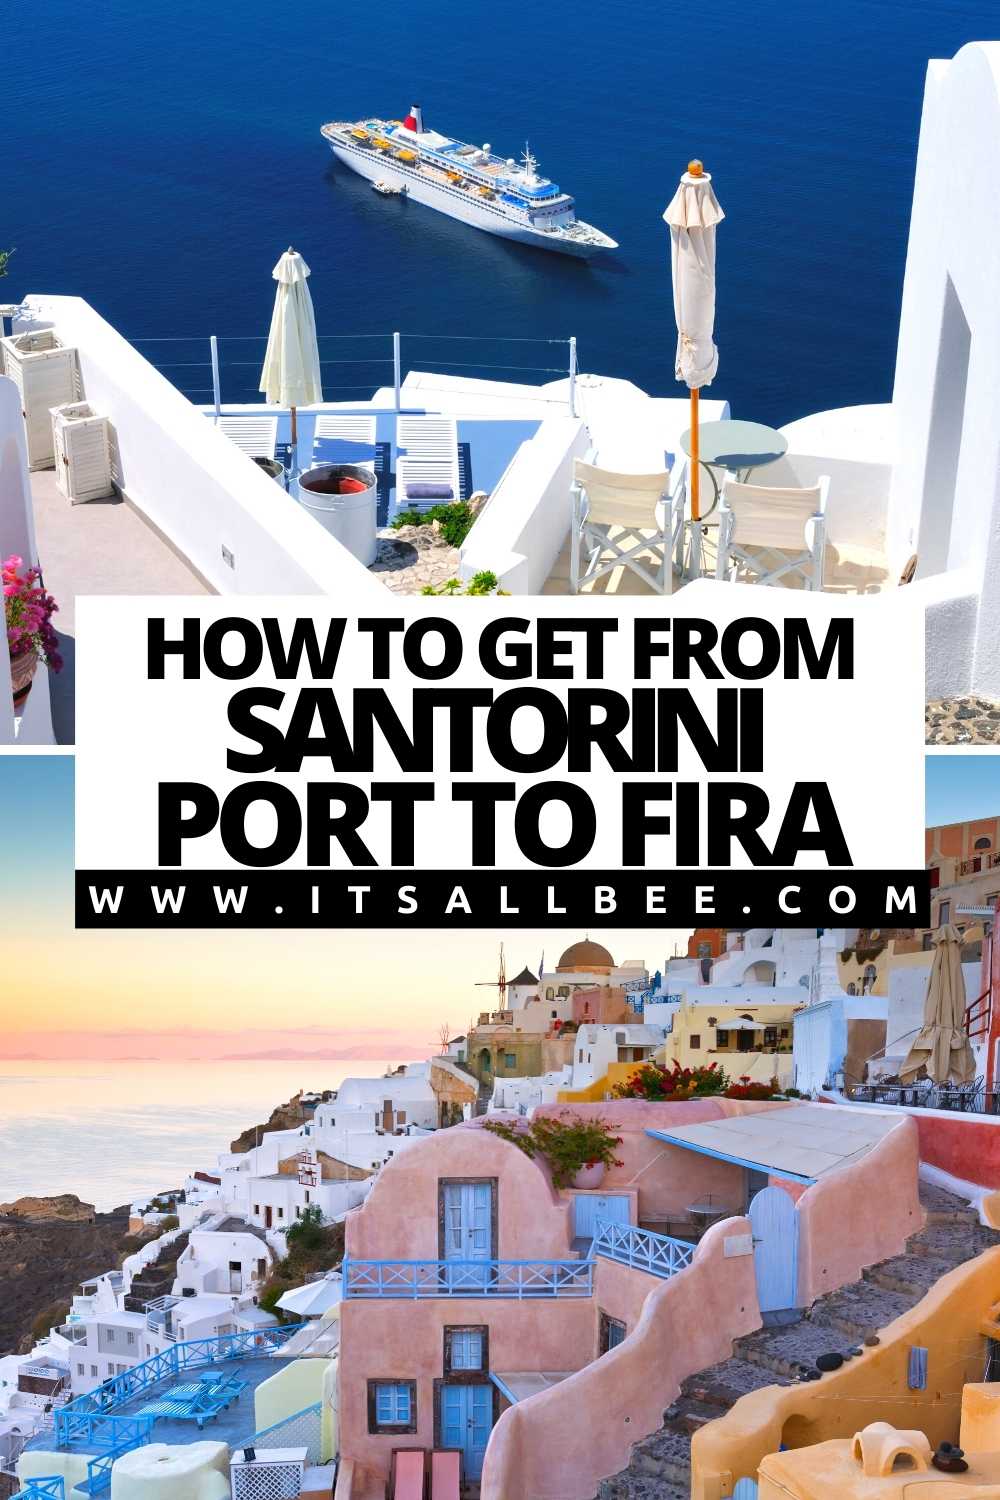 | Bus From Santorini Port To Fira | Fira To Port Bus Timetable | Taxi From Santorini Port To Fira | Bus Santorini Port To Fira | Santorini Port To Fira Transfer | Things To Do In Santorini | Santorini Travel Guide | Santorini Itinerary 